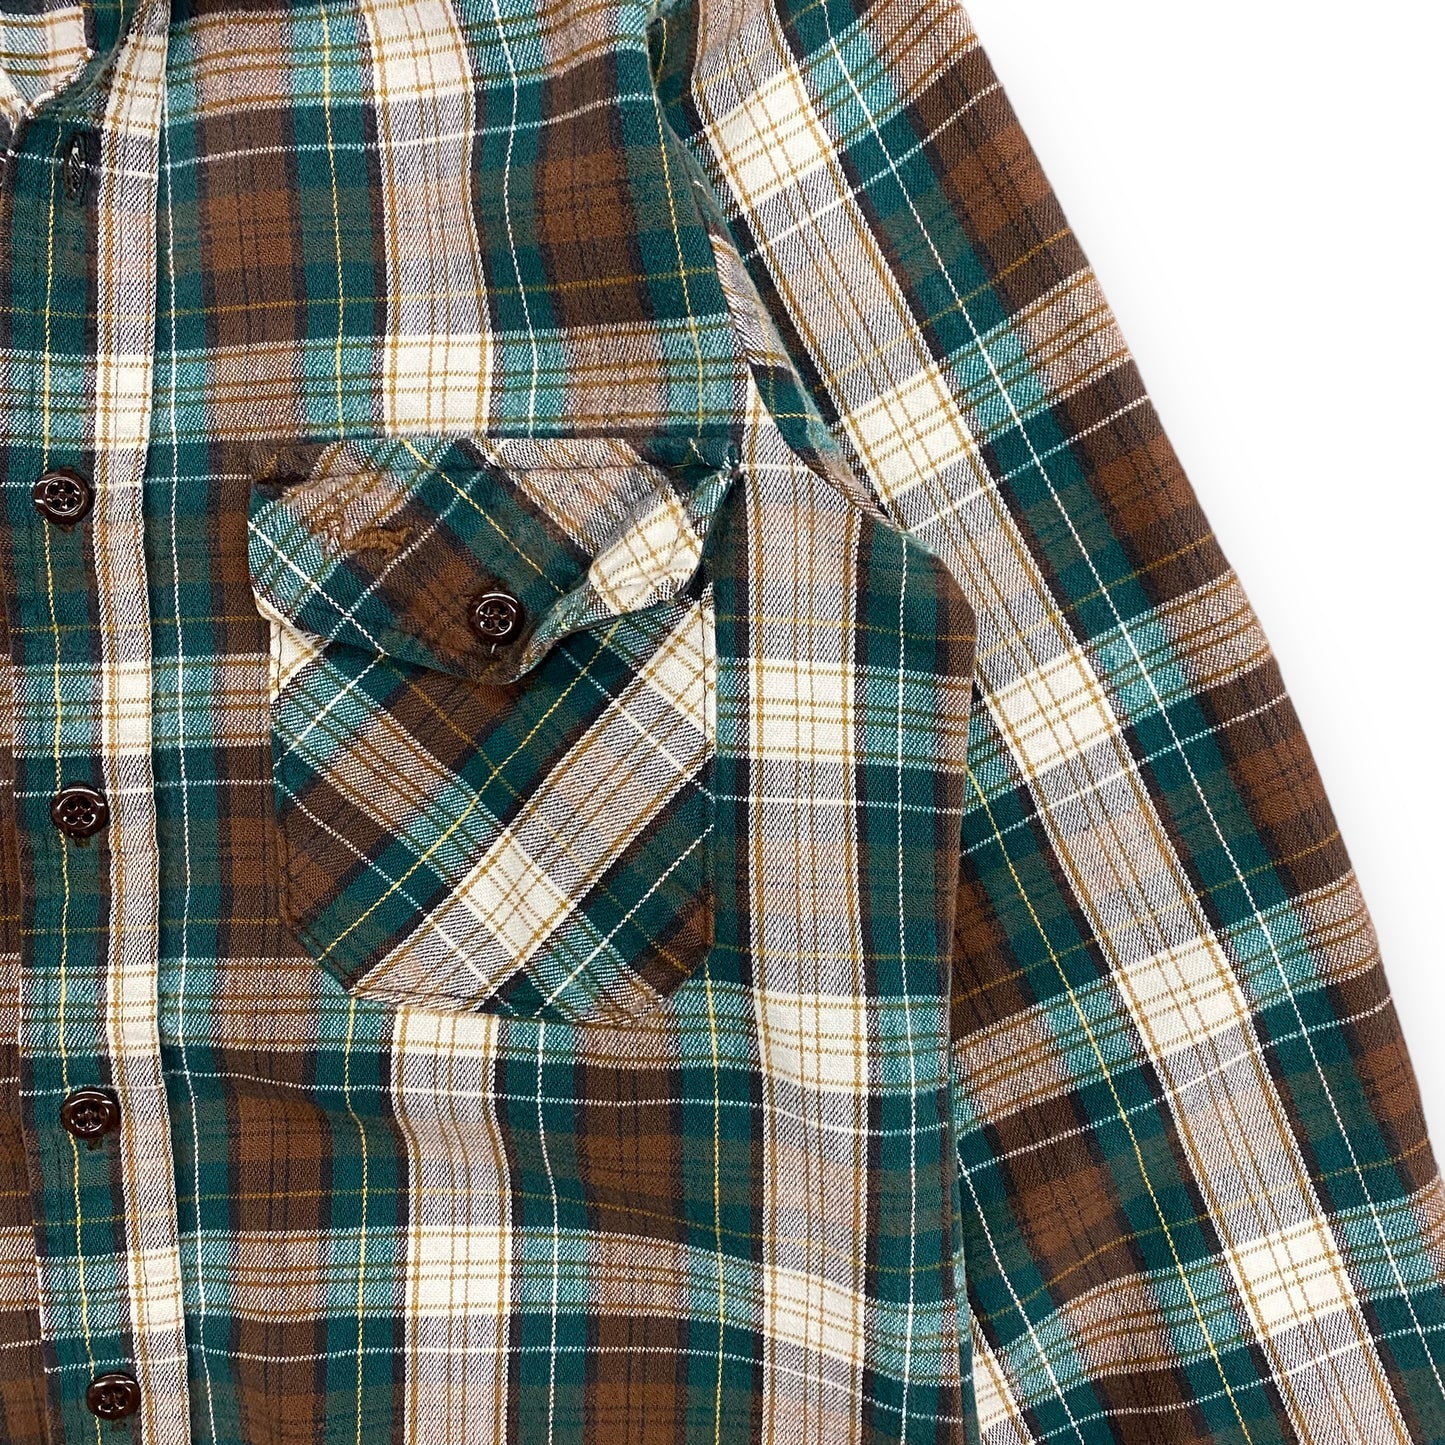 1980s Duxbak Flannel Plaid Button Up Shirt - Size Small